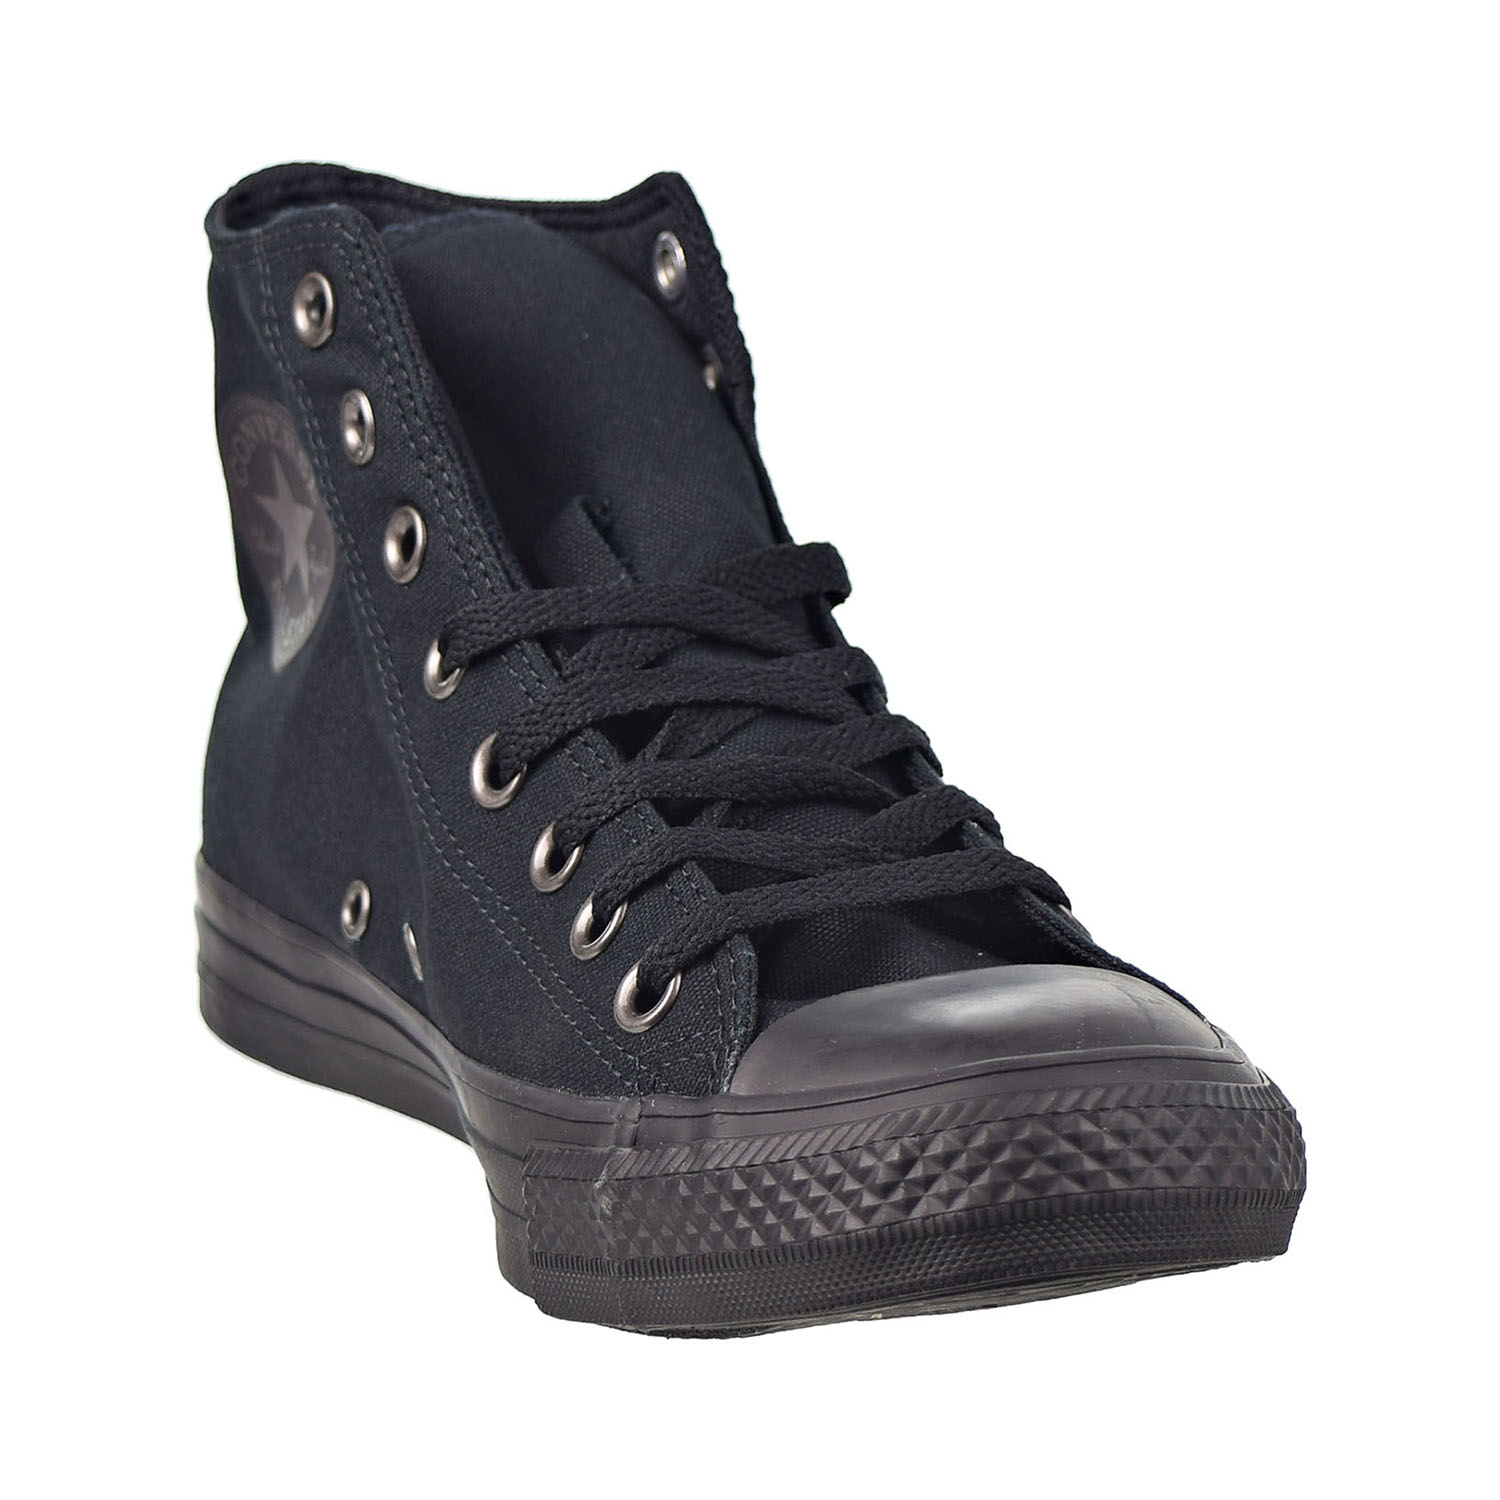 Converse Chuck Taylor All Star Hi Wordmark 2.0 Men's Shoes Black-Gunmetal-Black 165429f - image 2 of 6